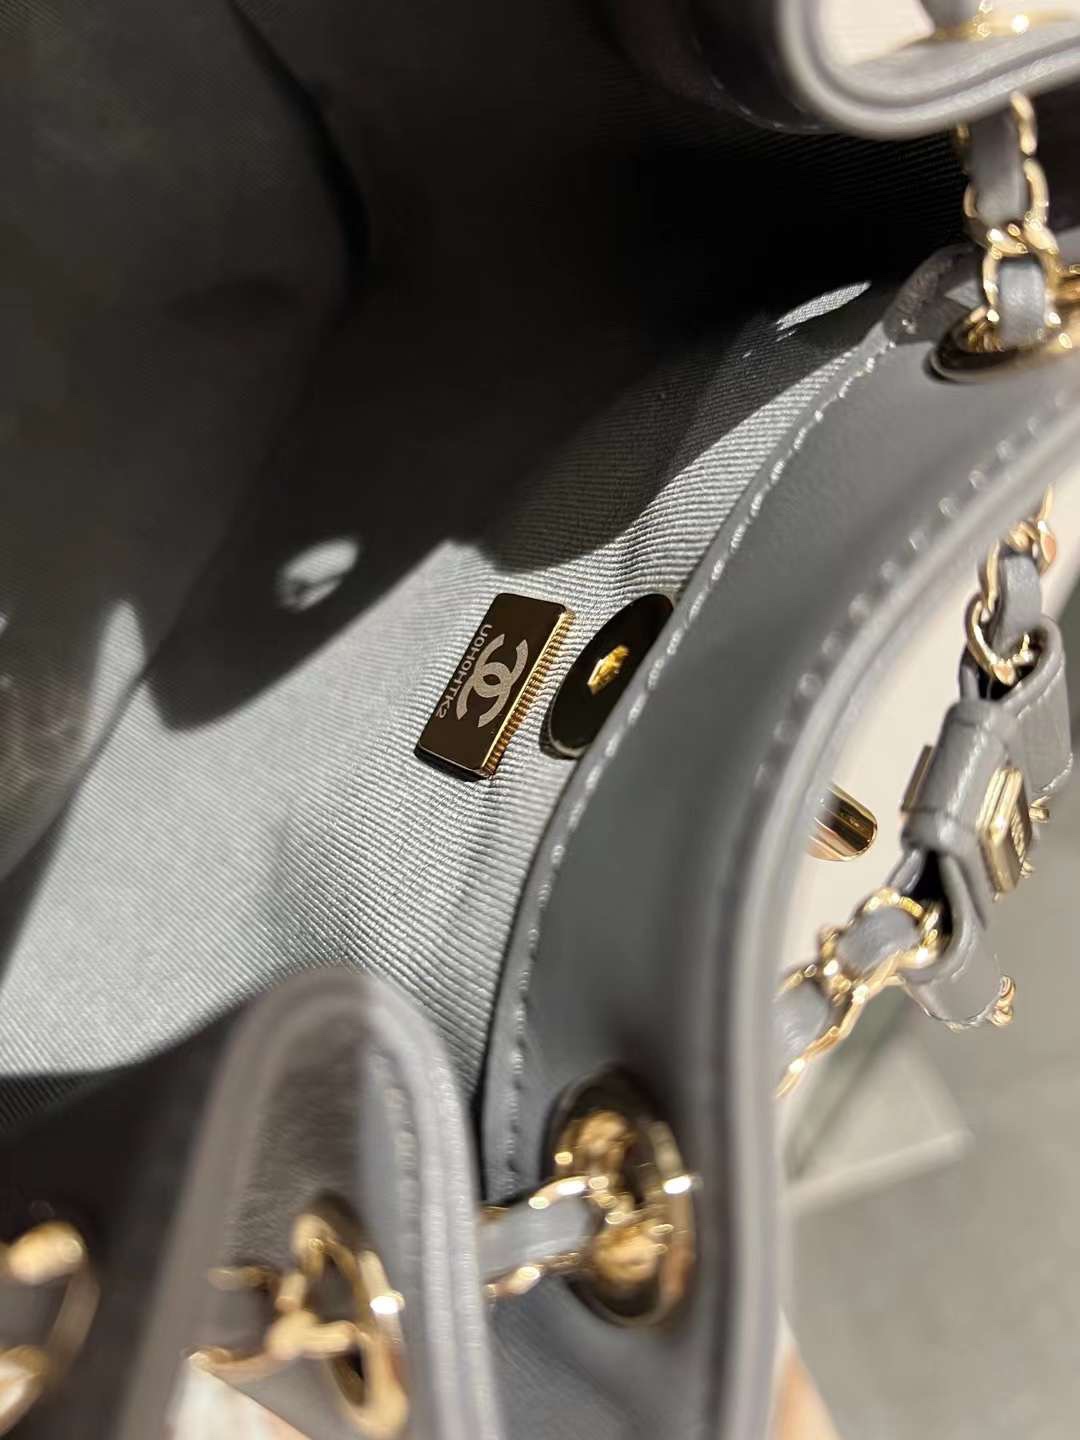 【P1880】香奈儿女包批发 Chanel 22年新款灰色进口羊皮DUMB双肩背包